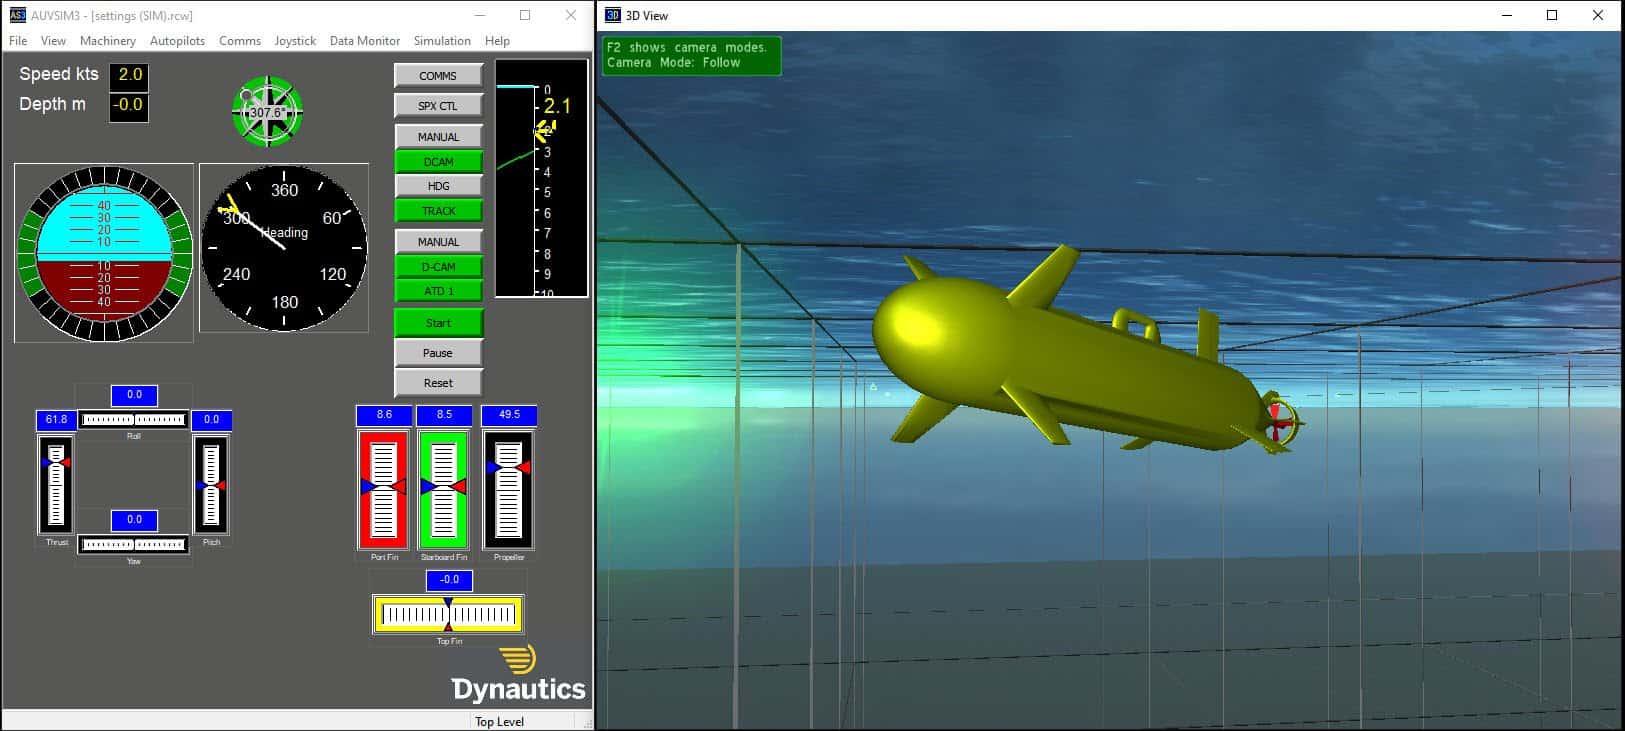 Dynautics-AUV-Sim-in-action